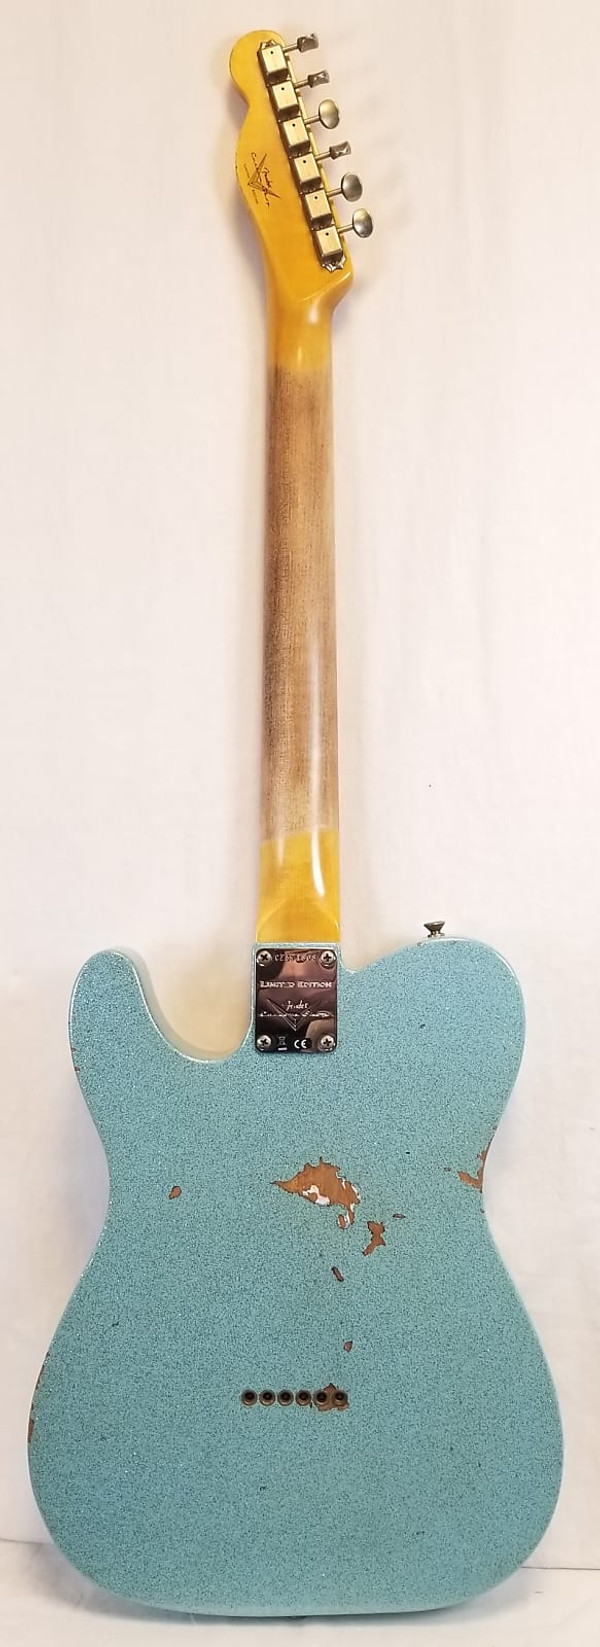 Fender Custom Shop Limited Edition '61 Tele Relic, Twisted Tele Neck/OBG Bridge Pups, AAA Rosewood FB, Aged Daphne Blue Sparkle